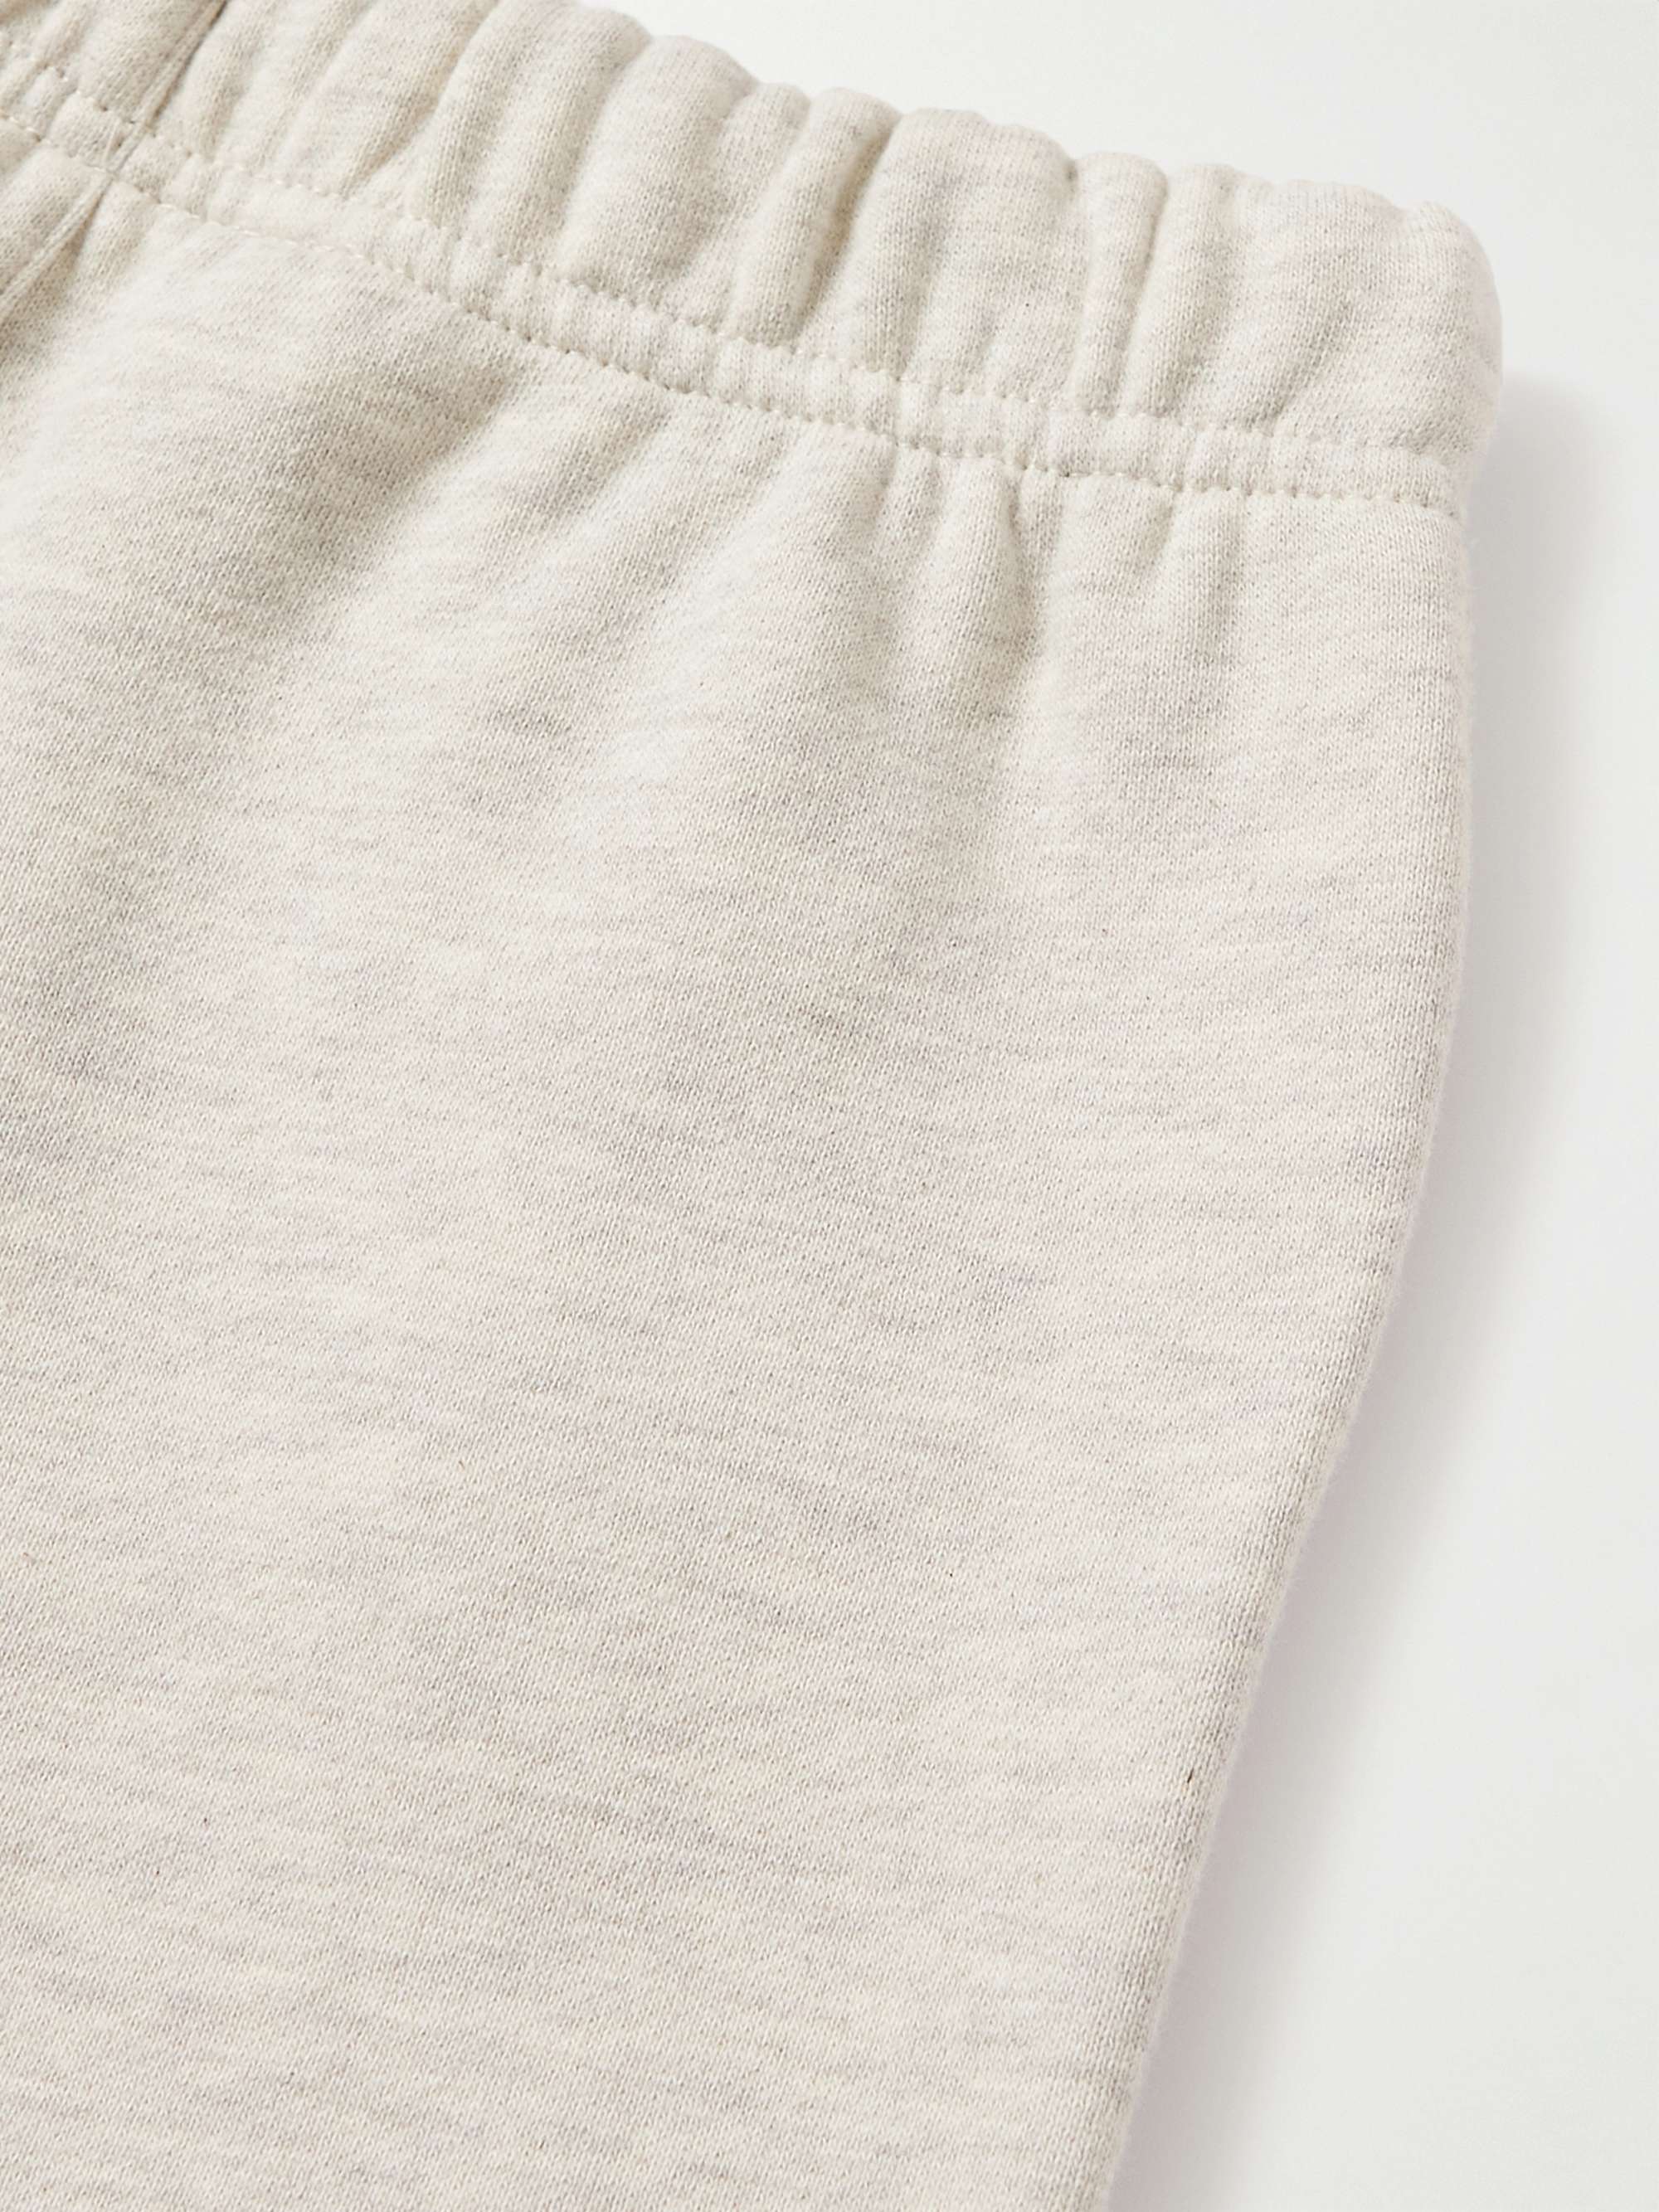 FEAR OF GOD ESSENTIALS KIDS Logo-Flocked Cotton-Blend Jersey Sweatpants